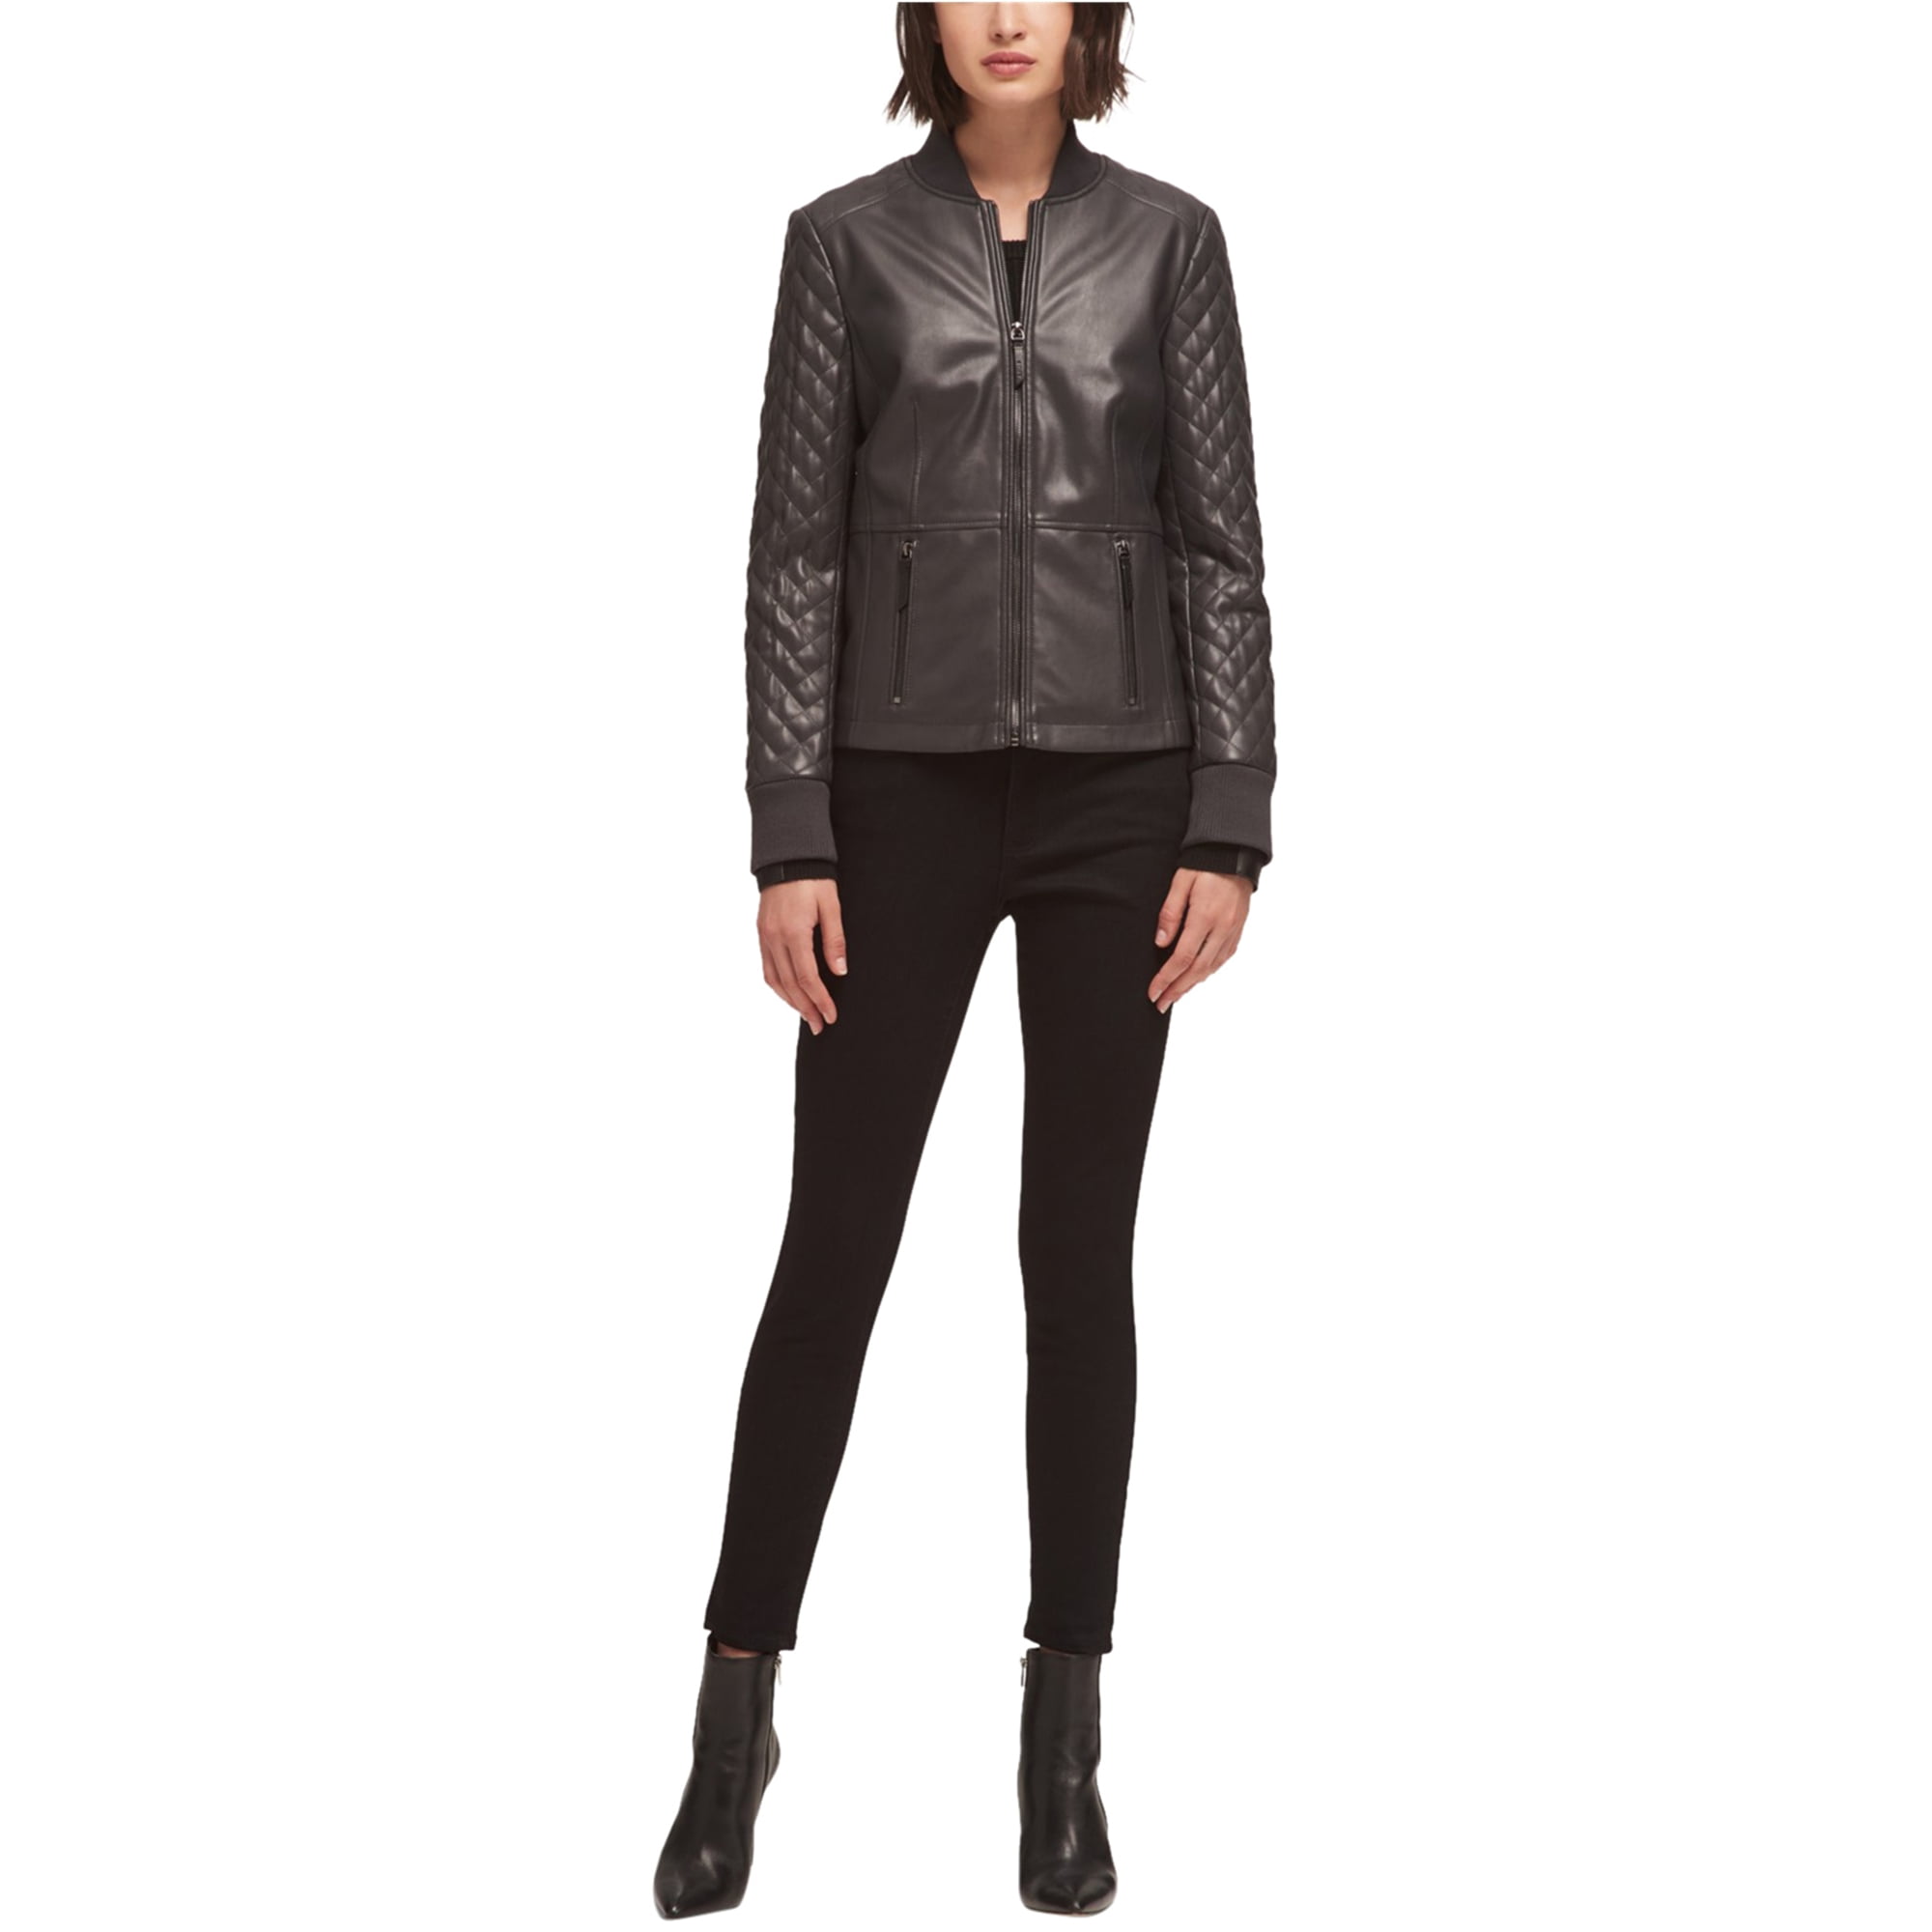 DKNY - DKNY Womens Faux Leather Quilted Jacket, Grey, Medium - Walmart ...